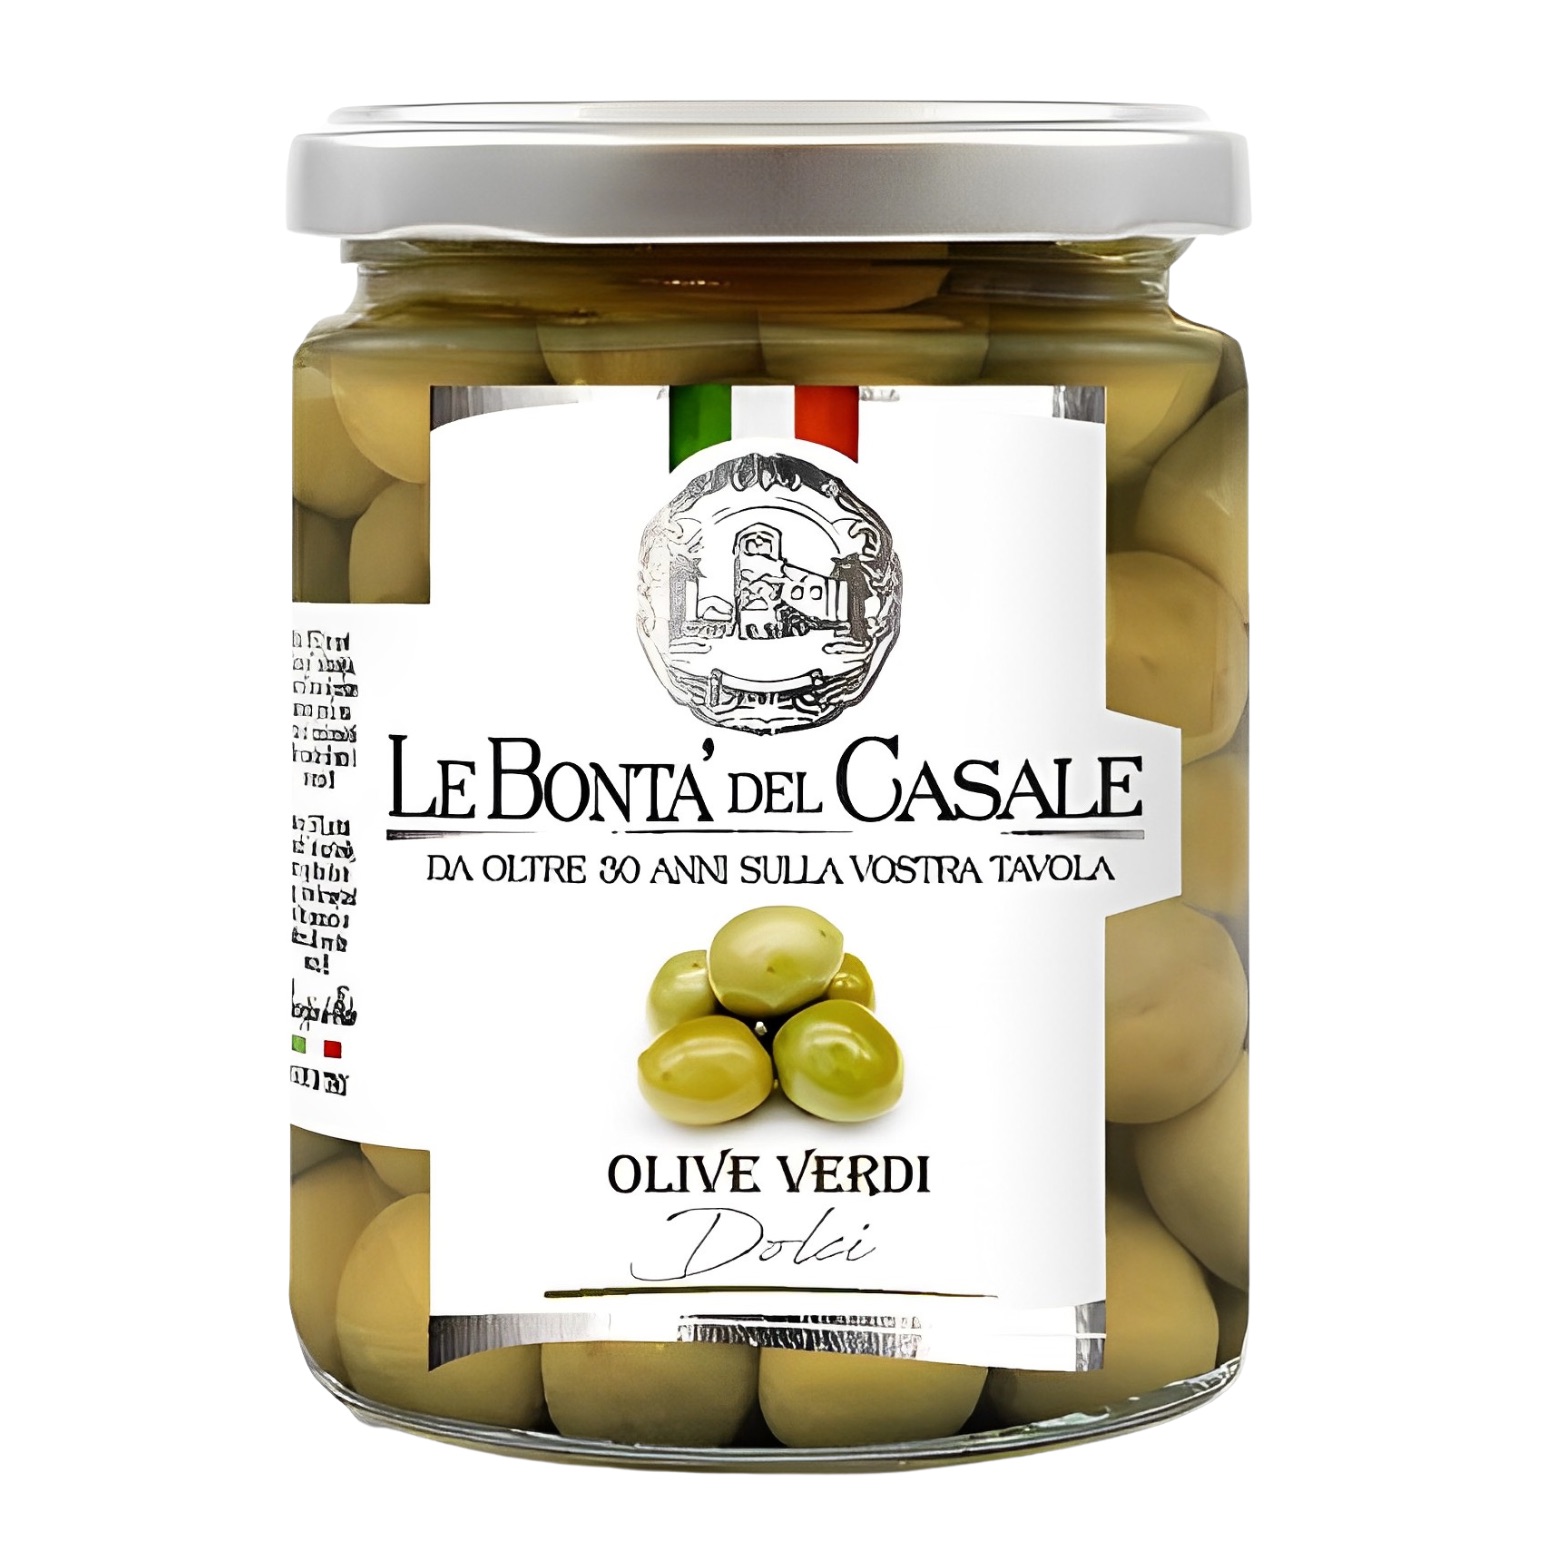 Süße Grüne Oliven in Salzlake 280 g – Hersteller Le Bonta del Casale